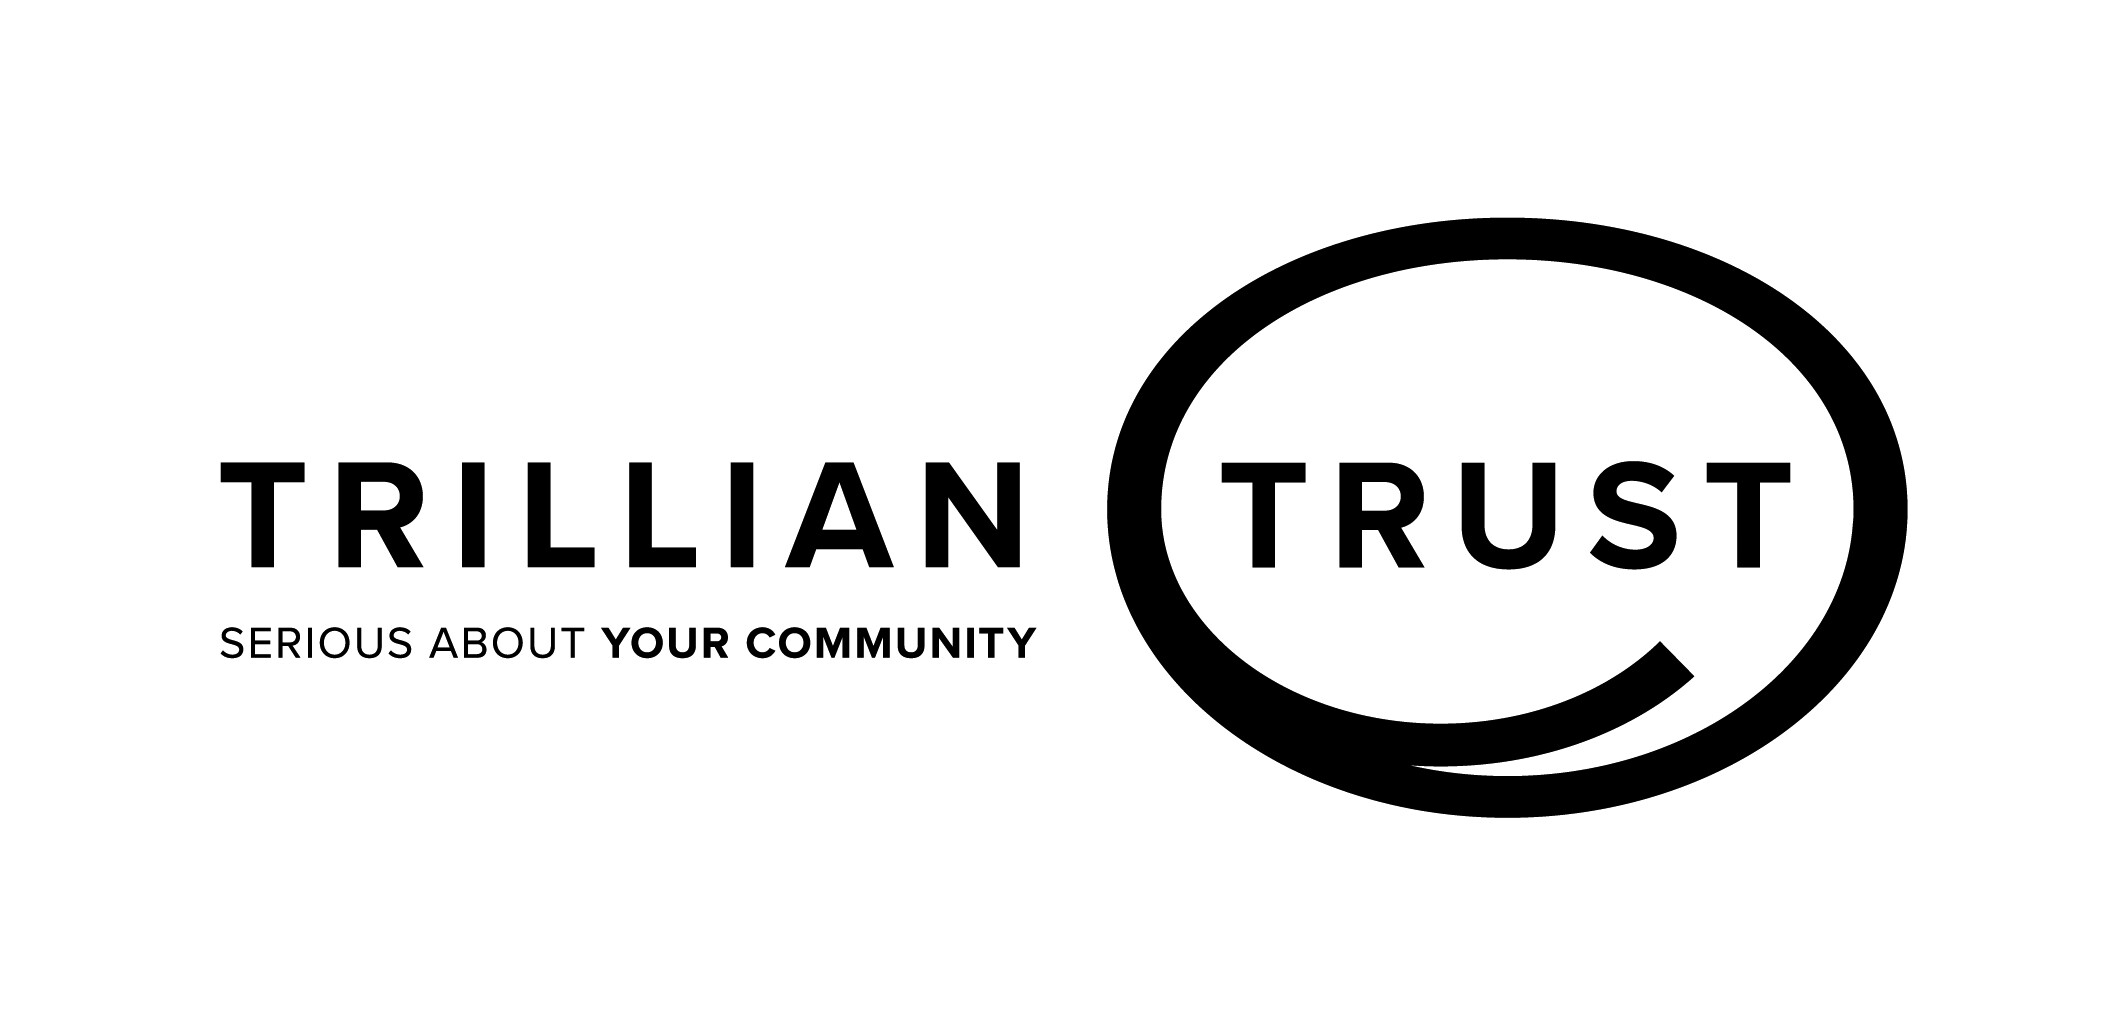 Trillian logo